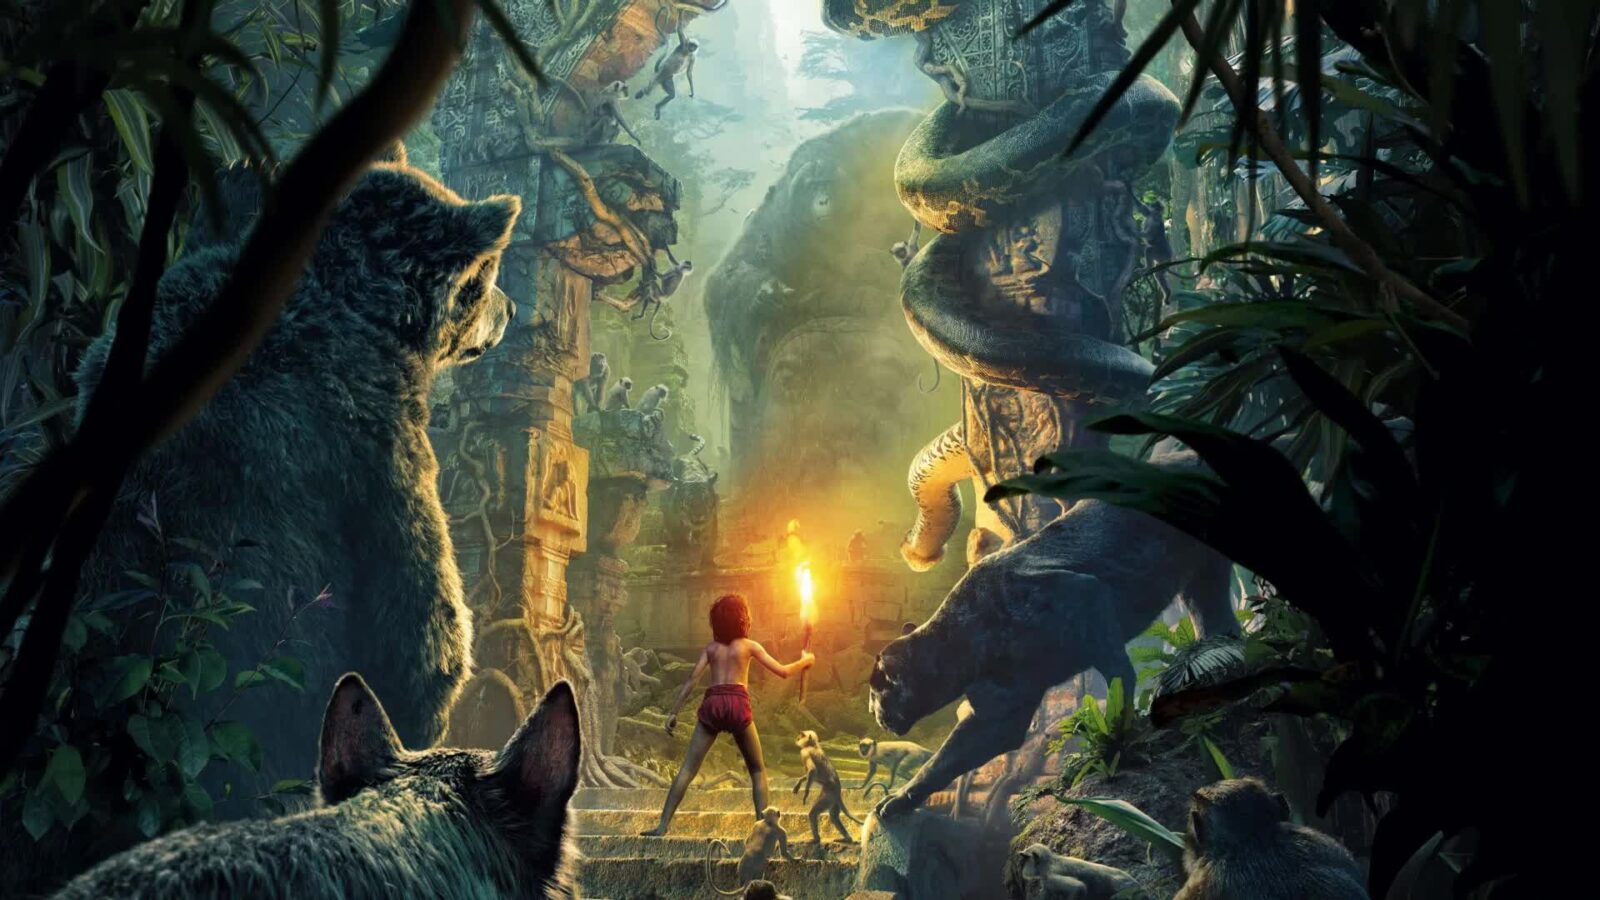 LiveWallpapers4Free.com | Jungle Book Movie - Movie Live Wallpaper